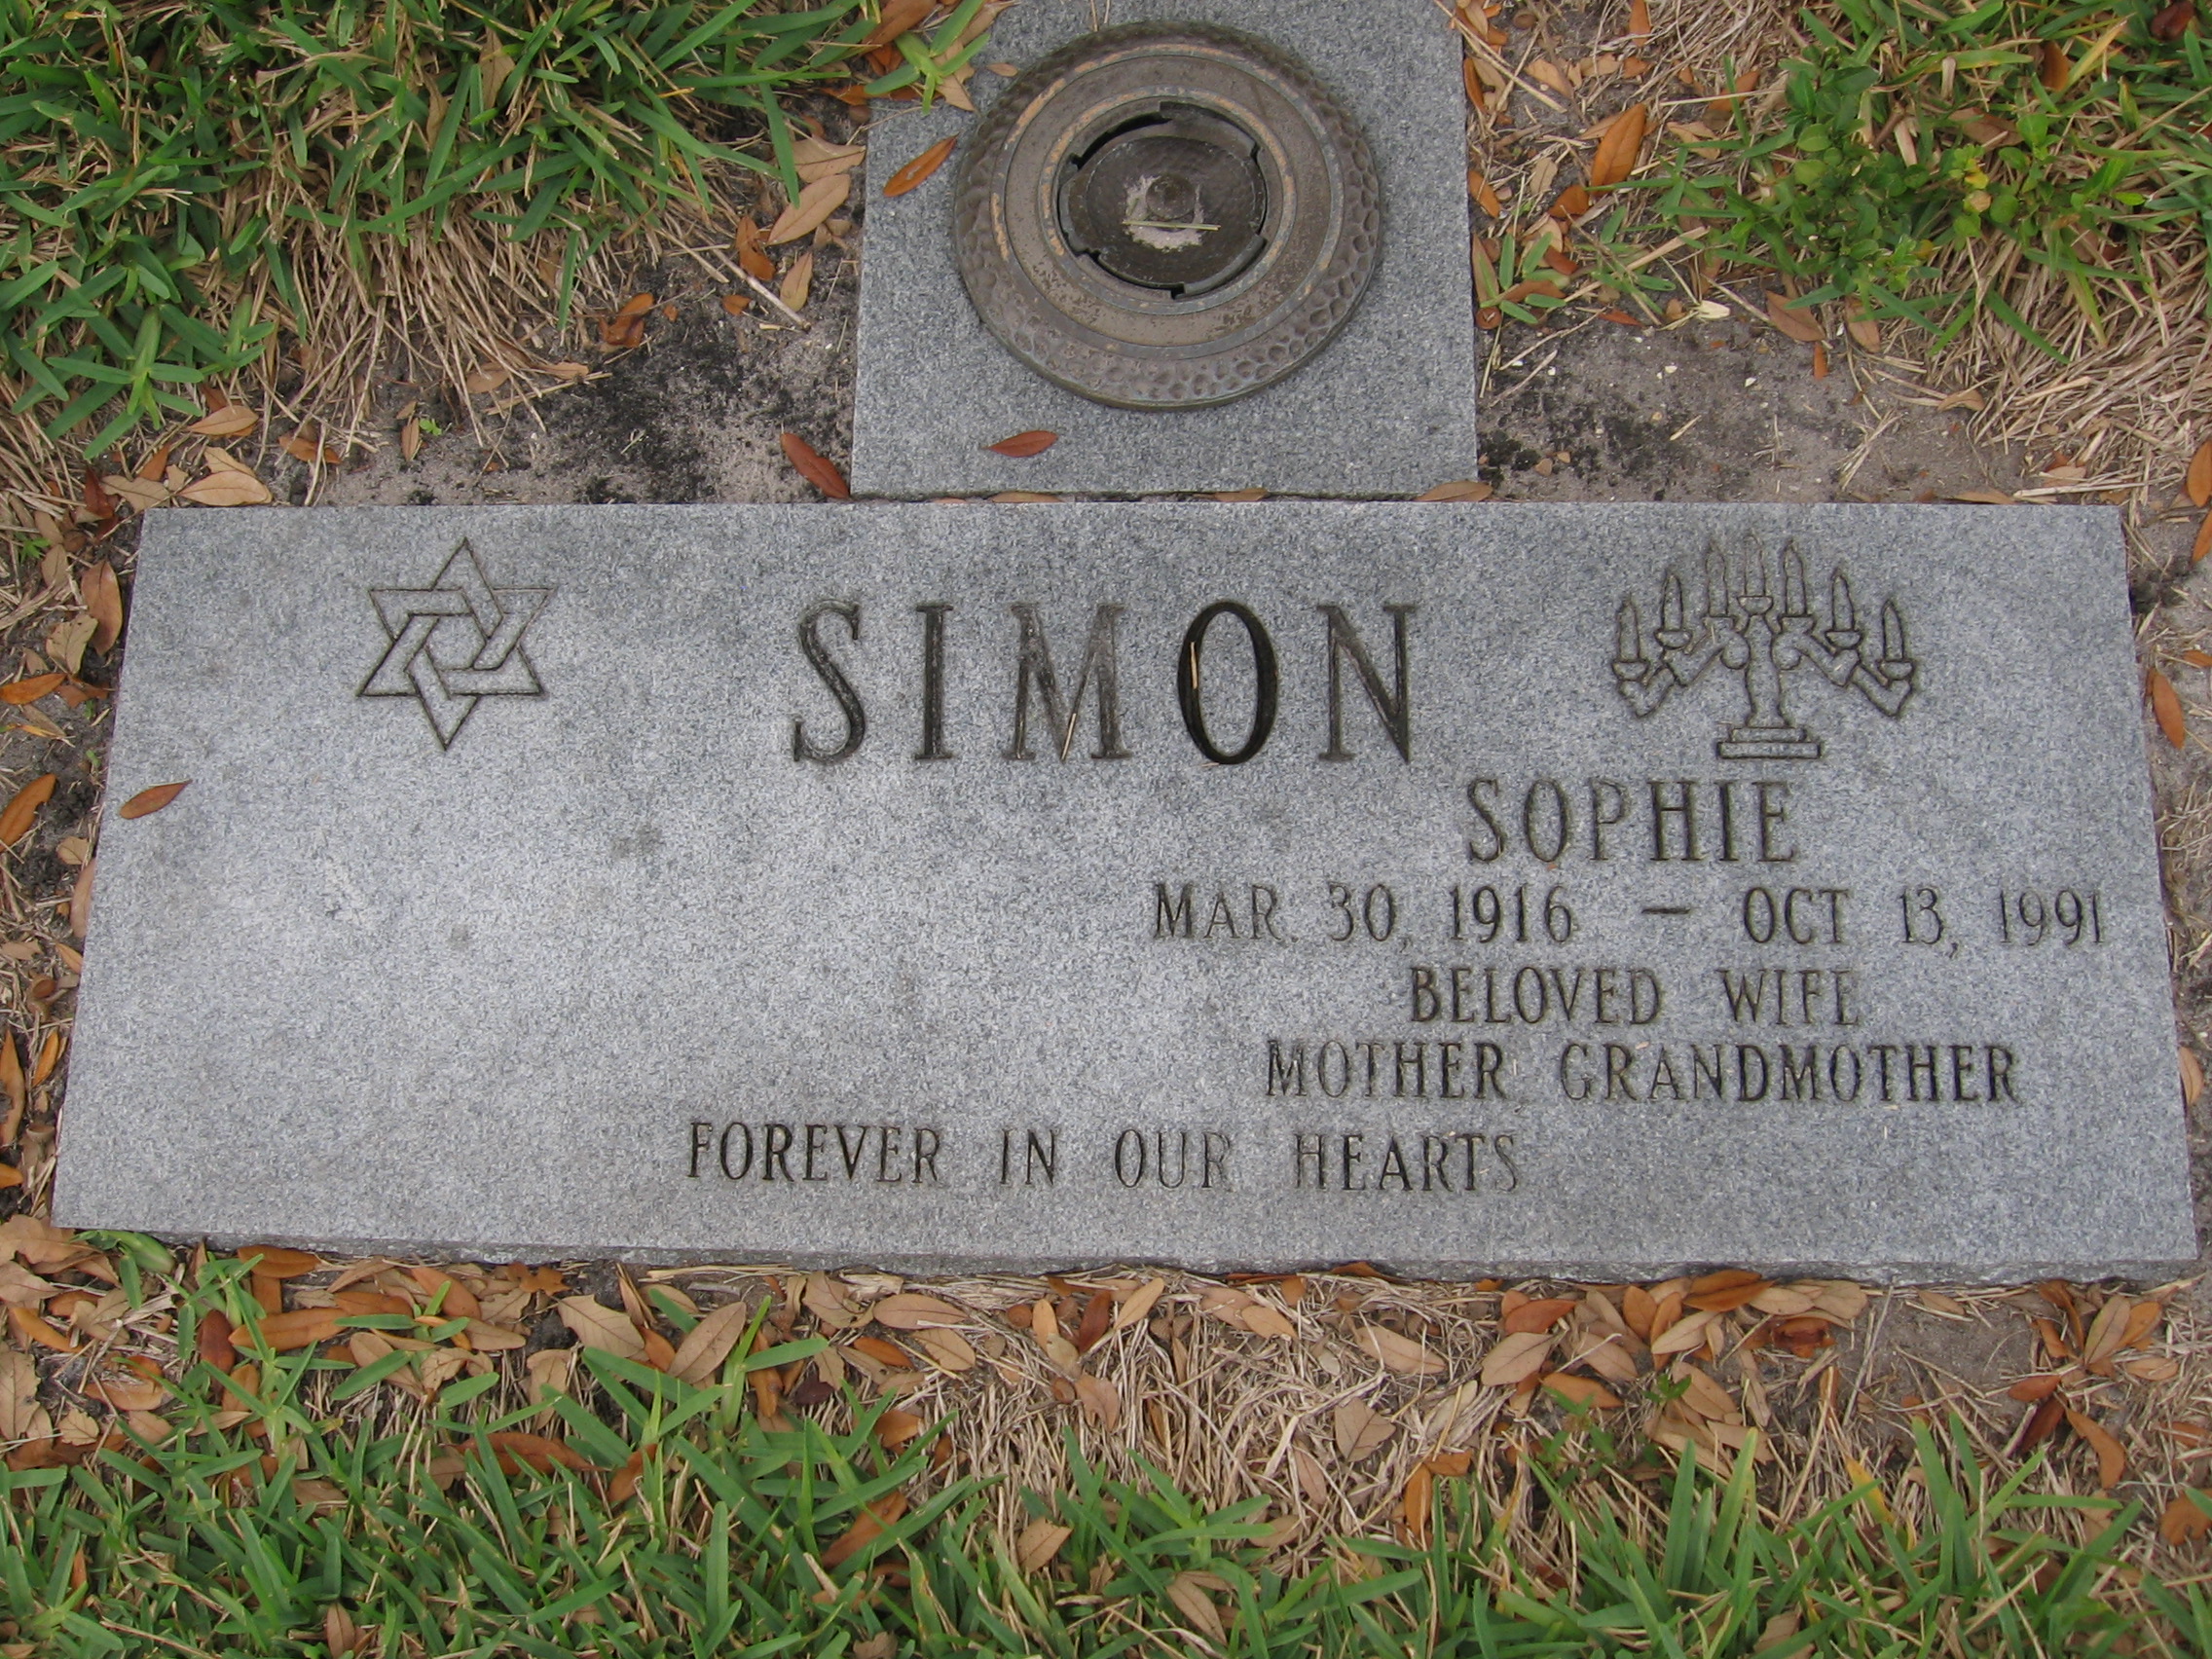 Sophie Simon